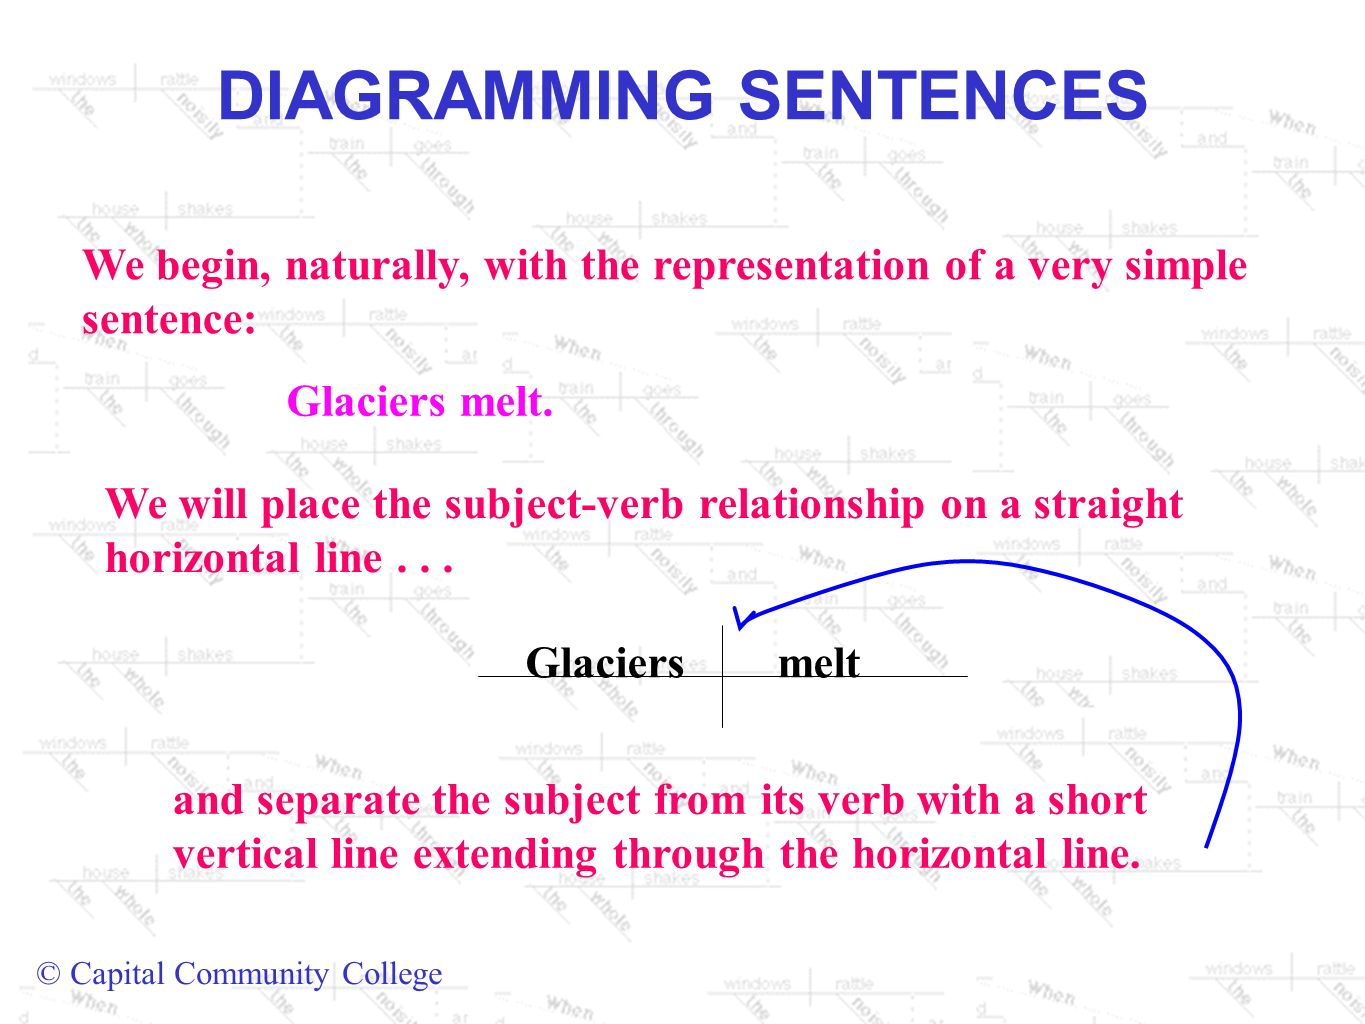 Diagramming Sentences Online Diagramming Sentences Ppt Video Online Download